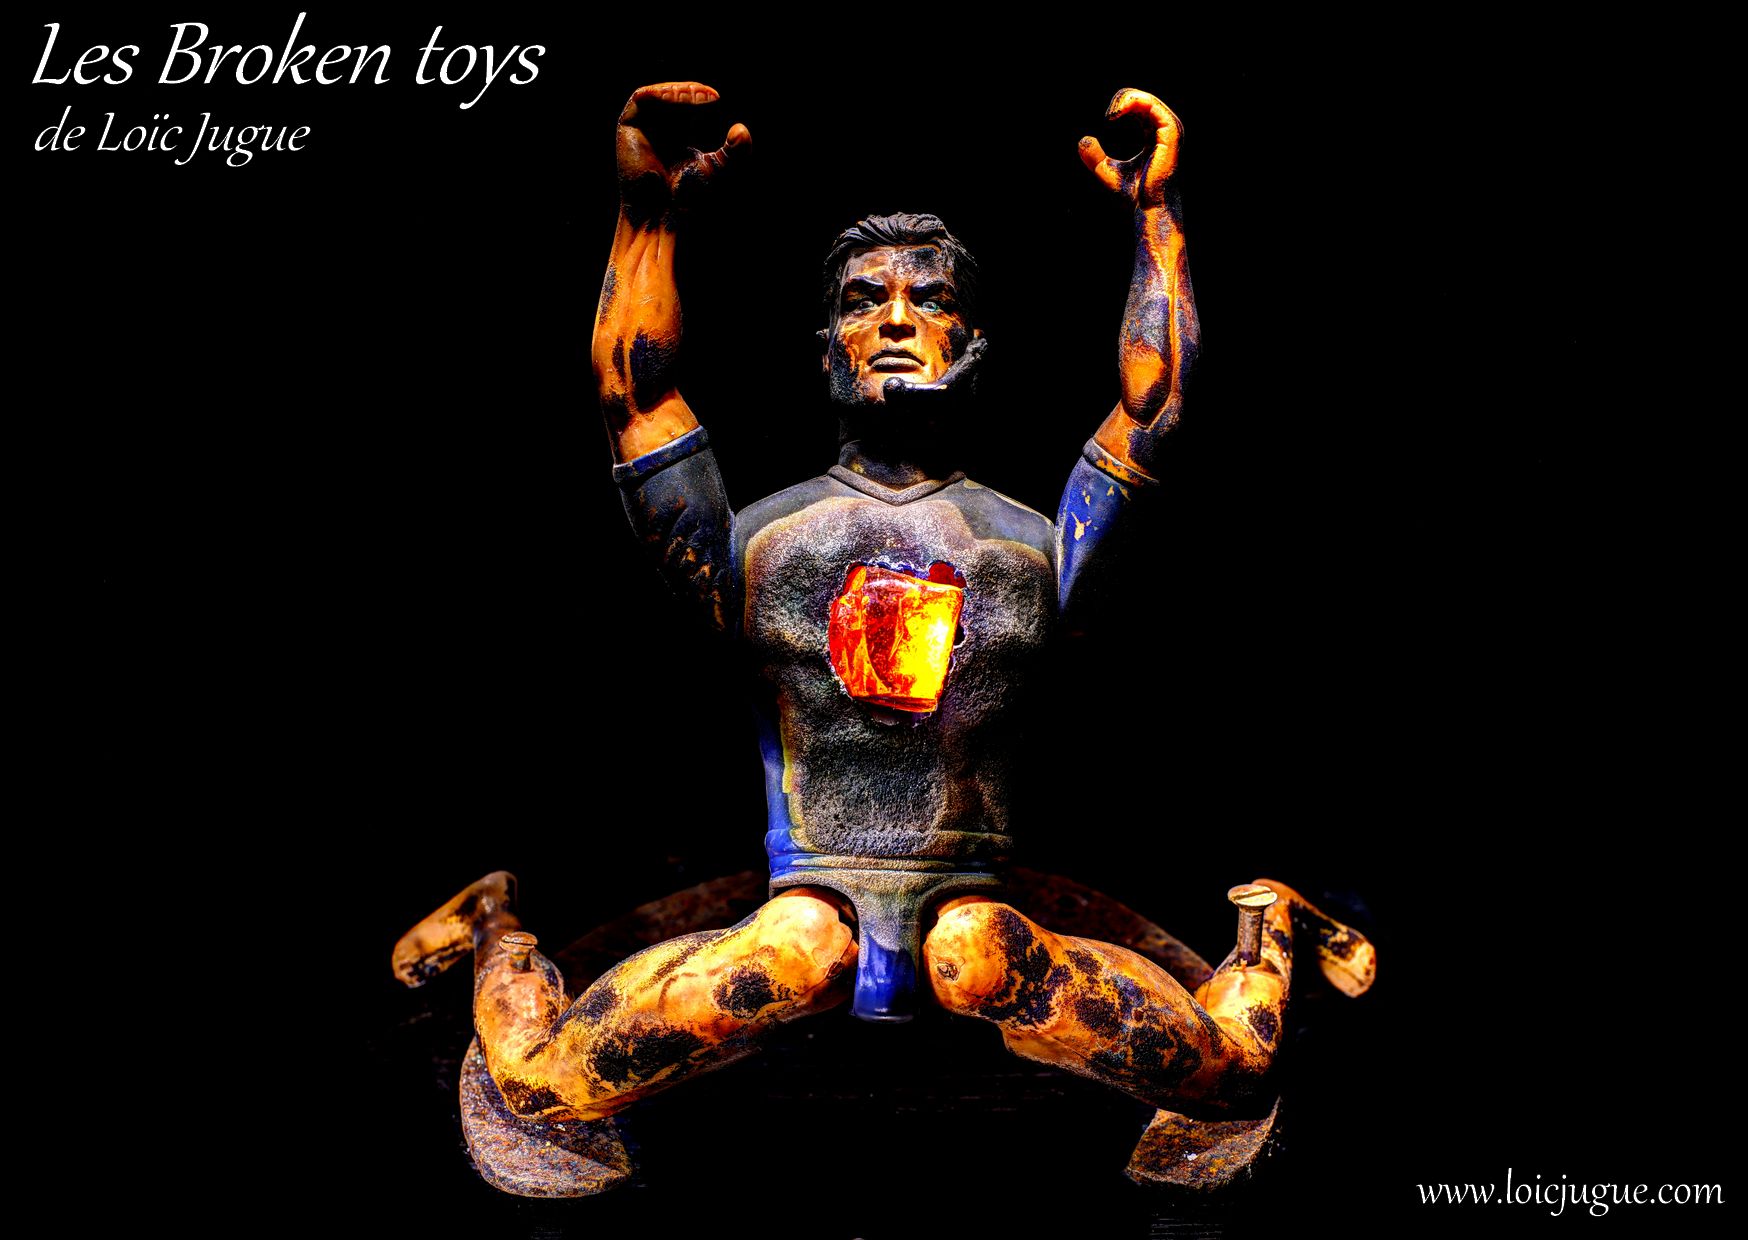 Les broken toys de Loïc Jugue: Croire?